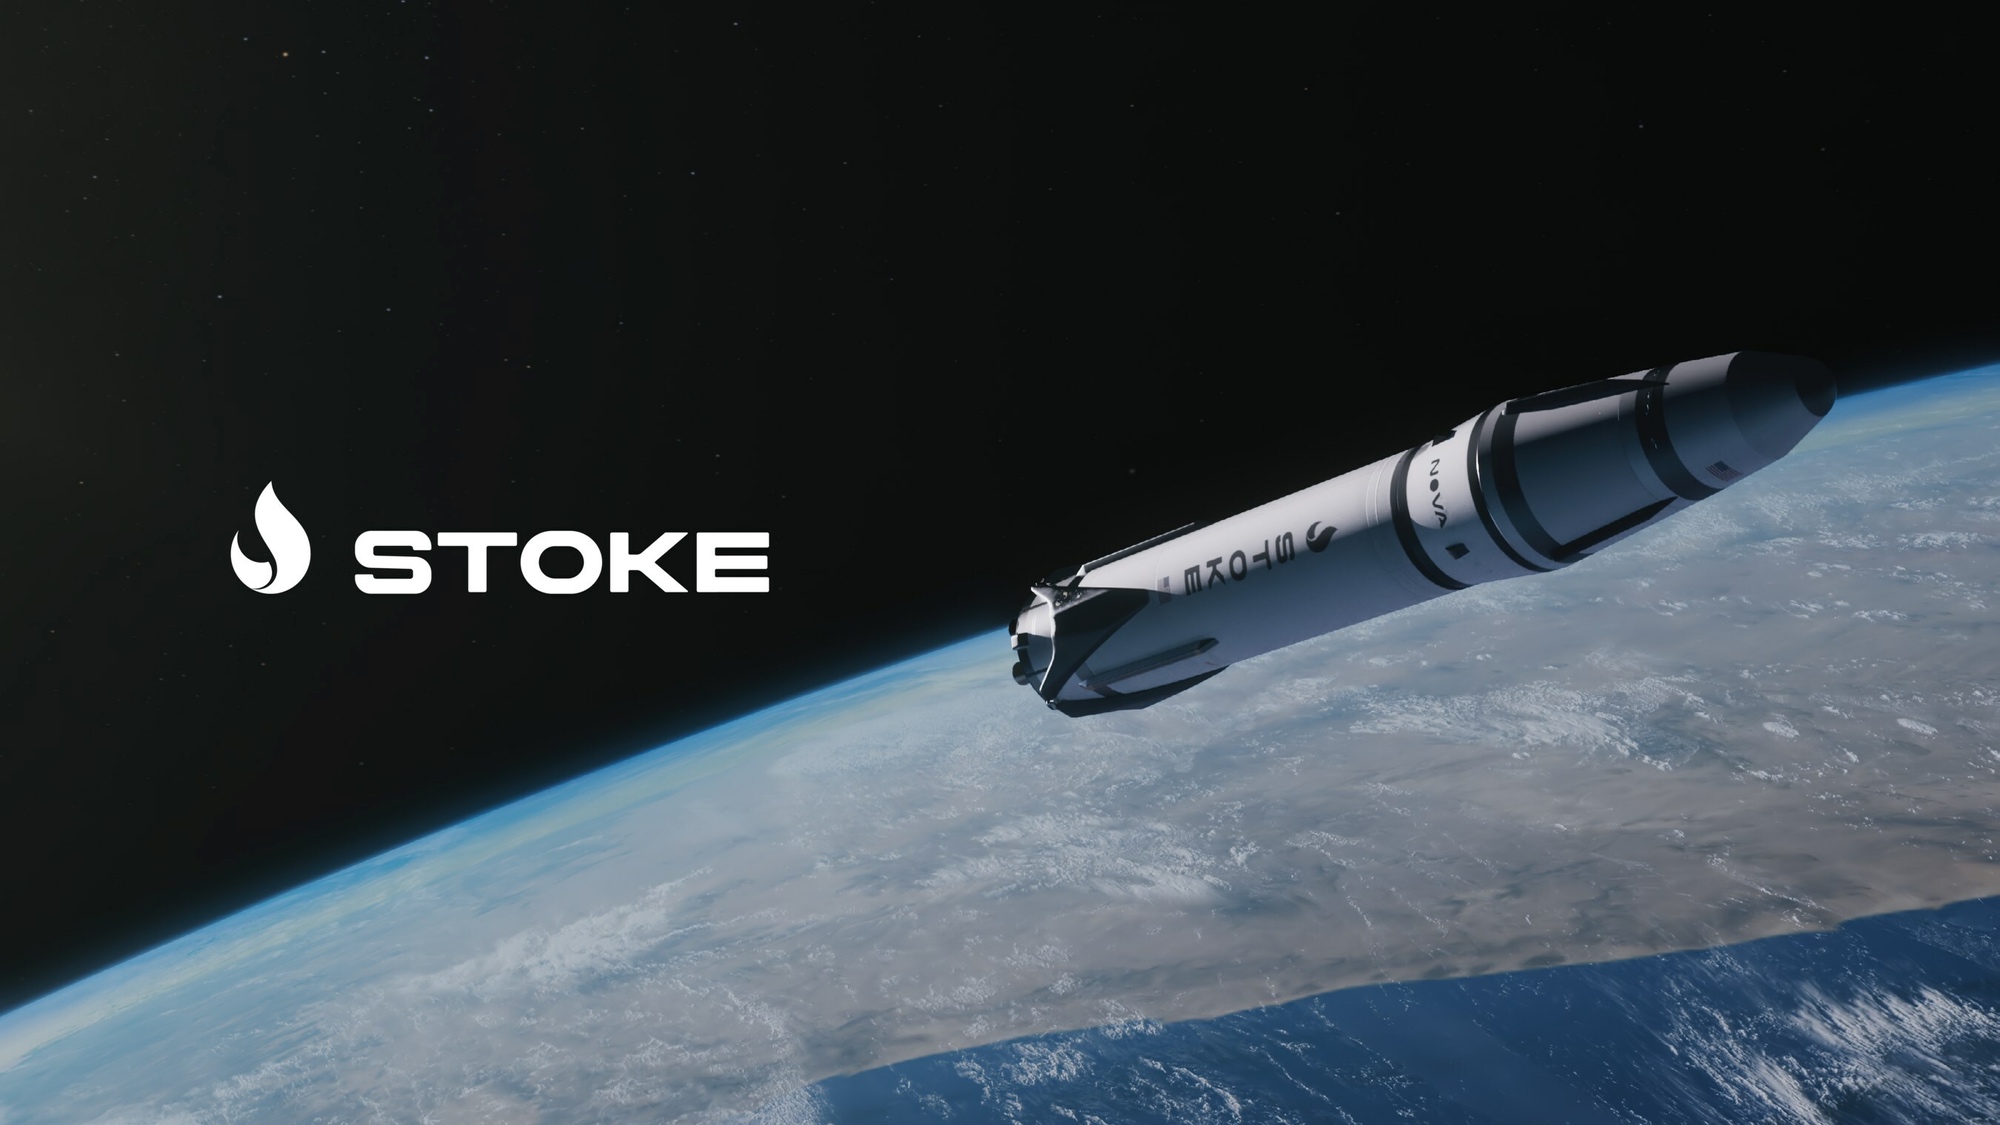 Stoke Space raises $100 million for reusable rocket development - SpaceNews